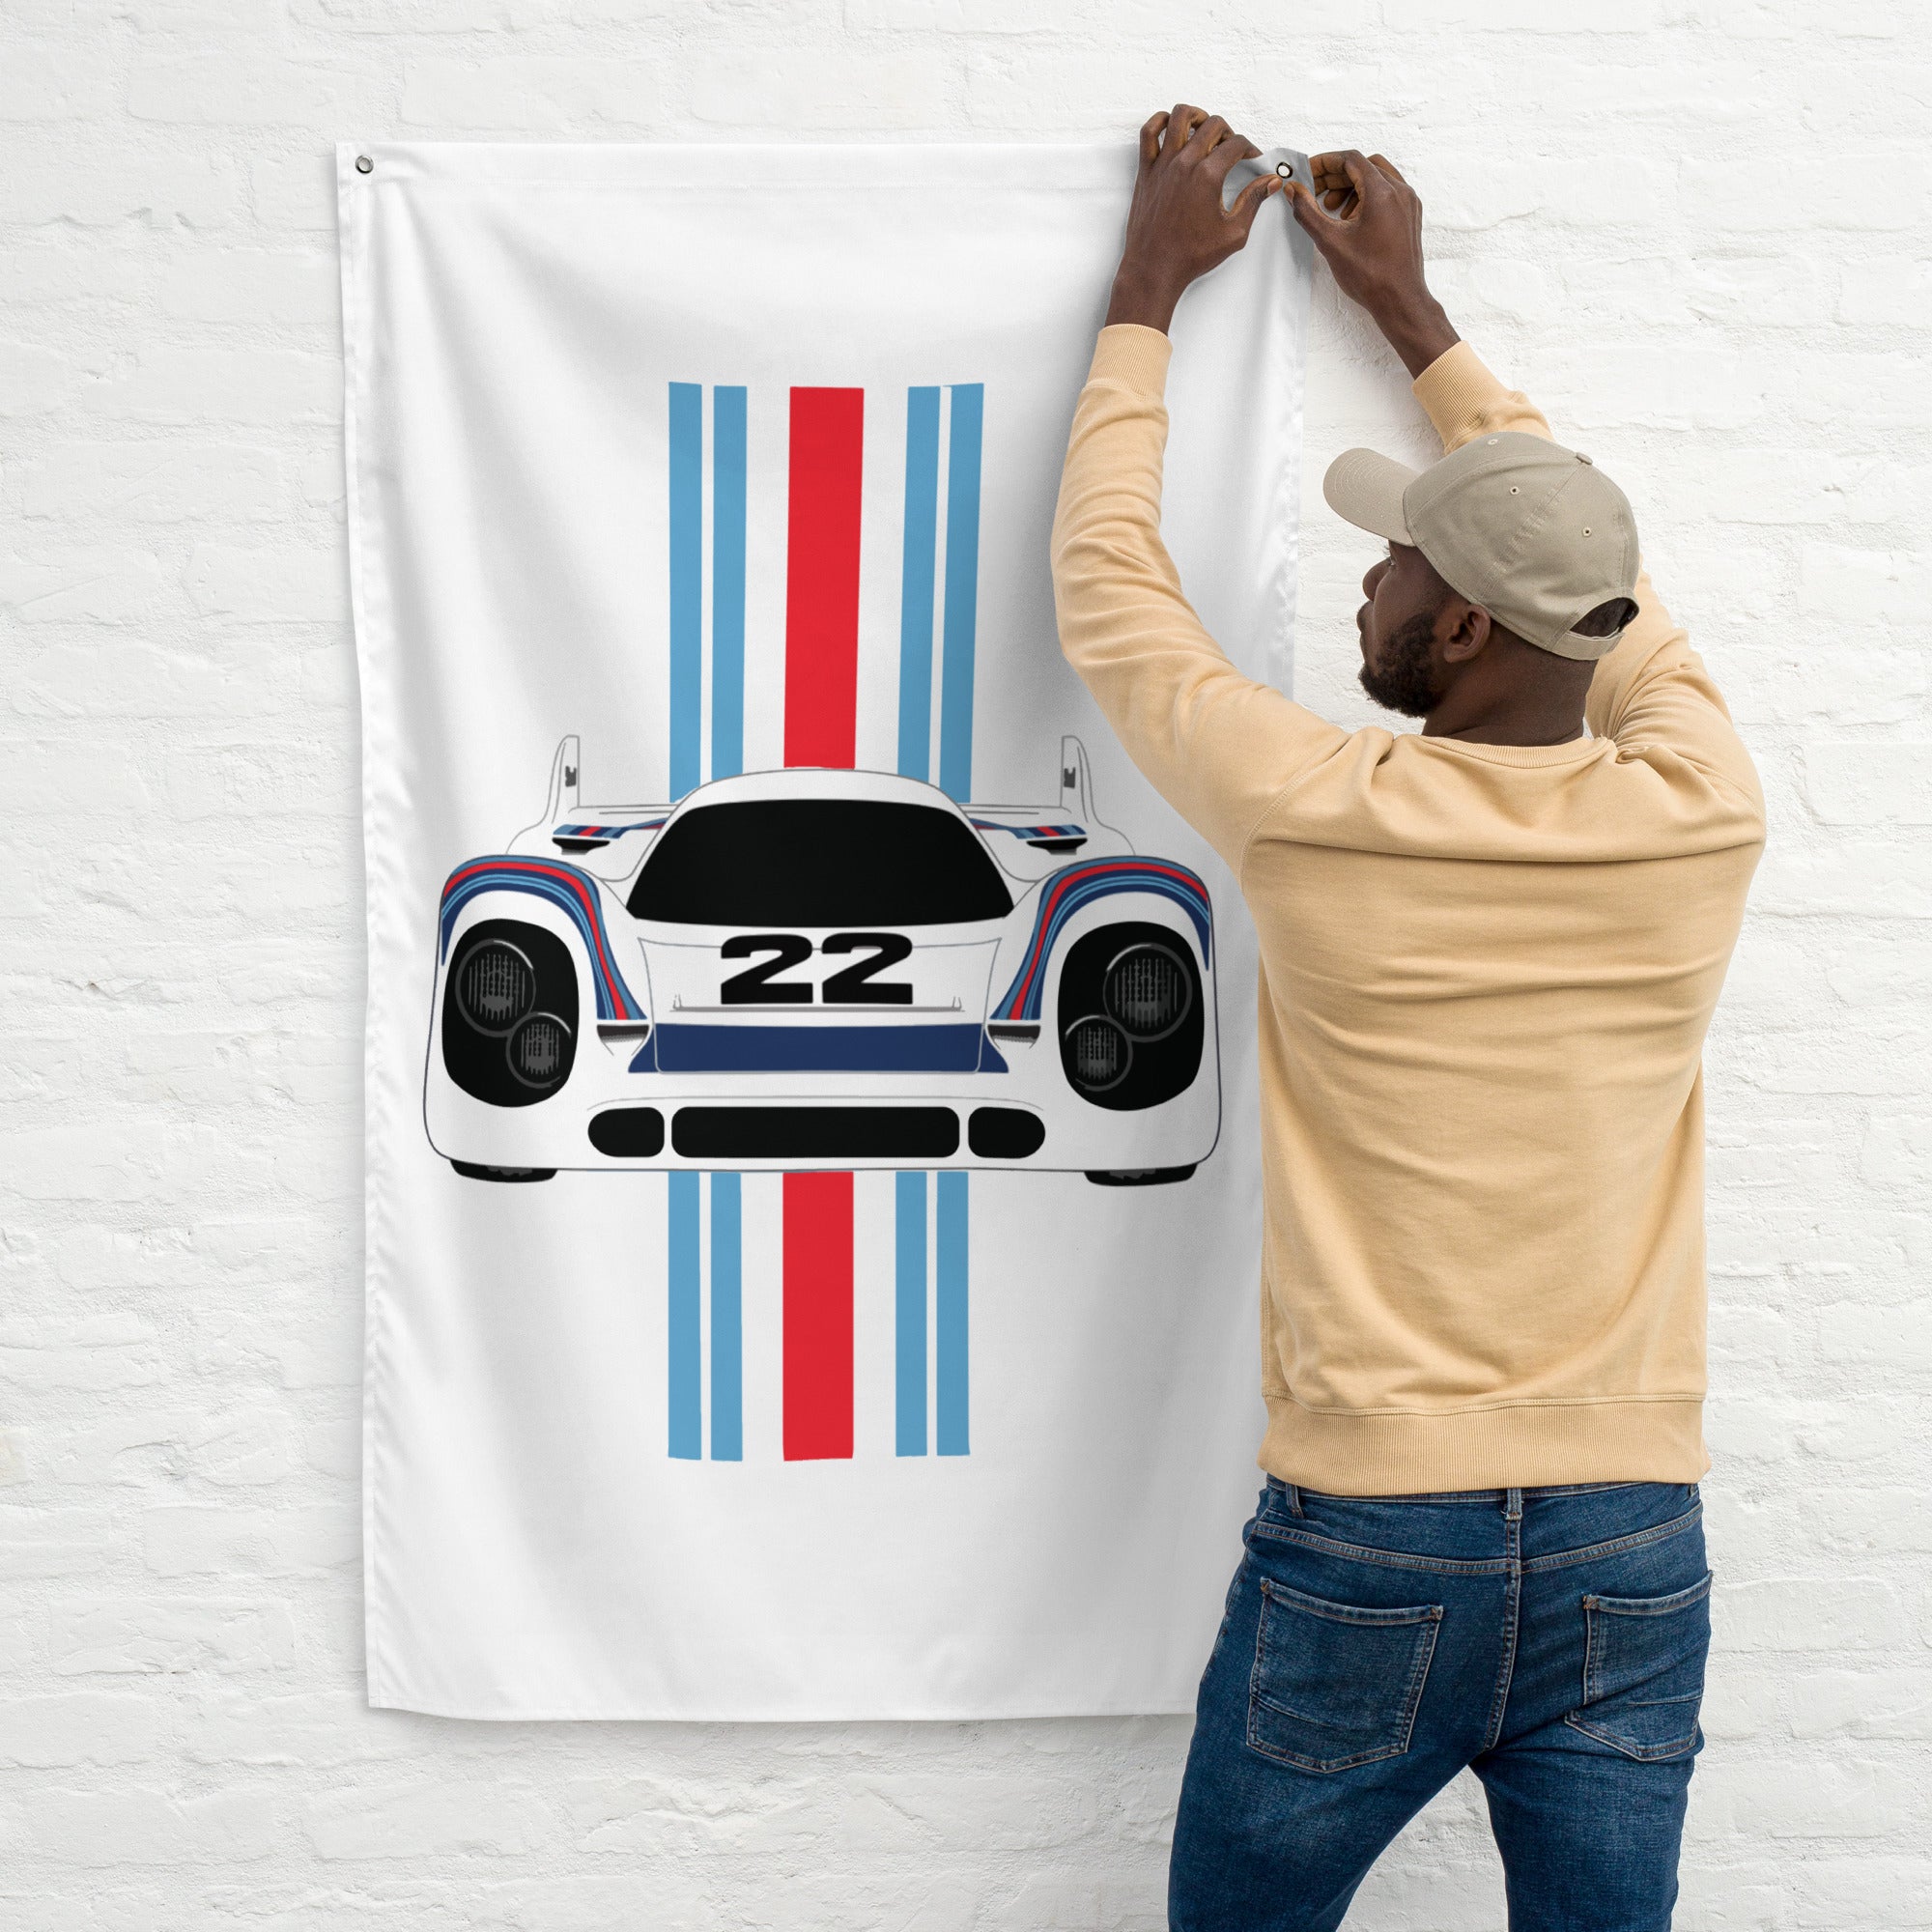 Retro Race Car 917 Vintage Racing Stripes Historic Motorsport Art Tapestry Banner Flag 34.5" x 56"